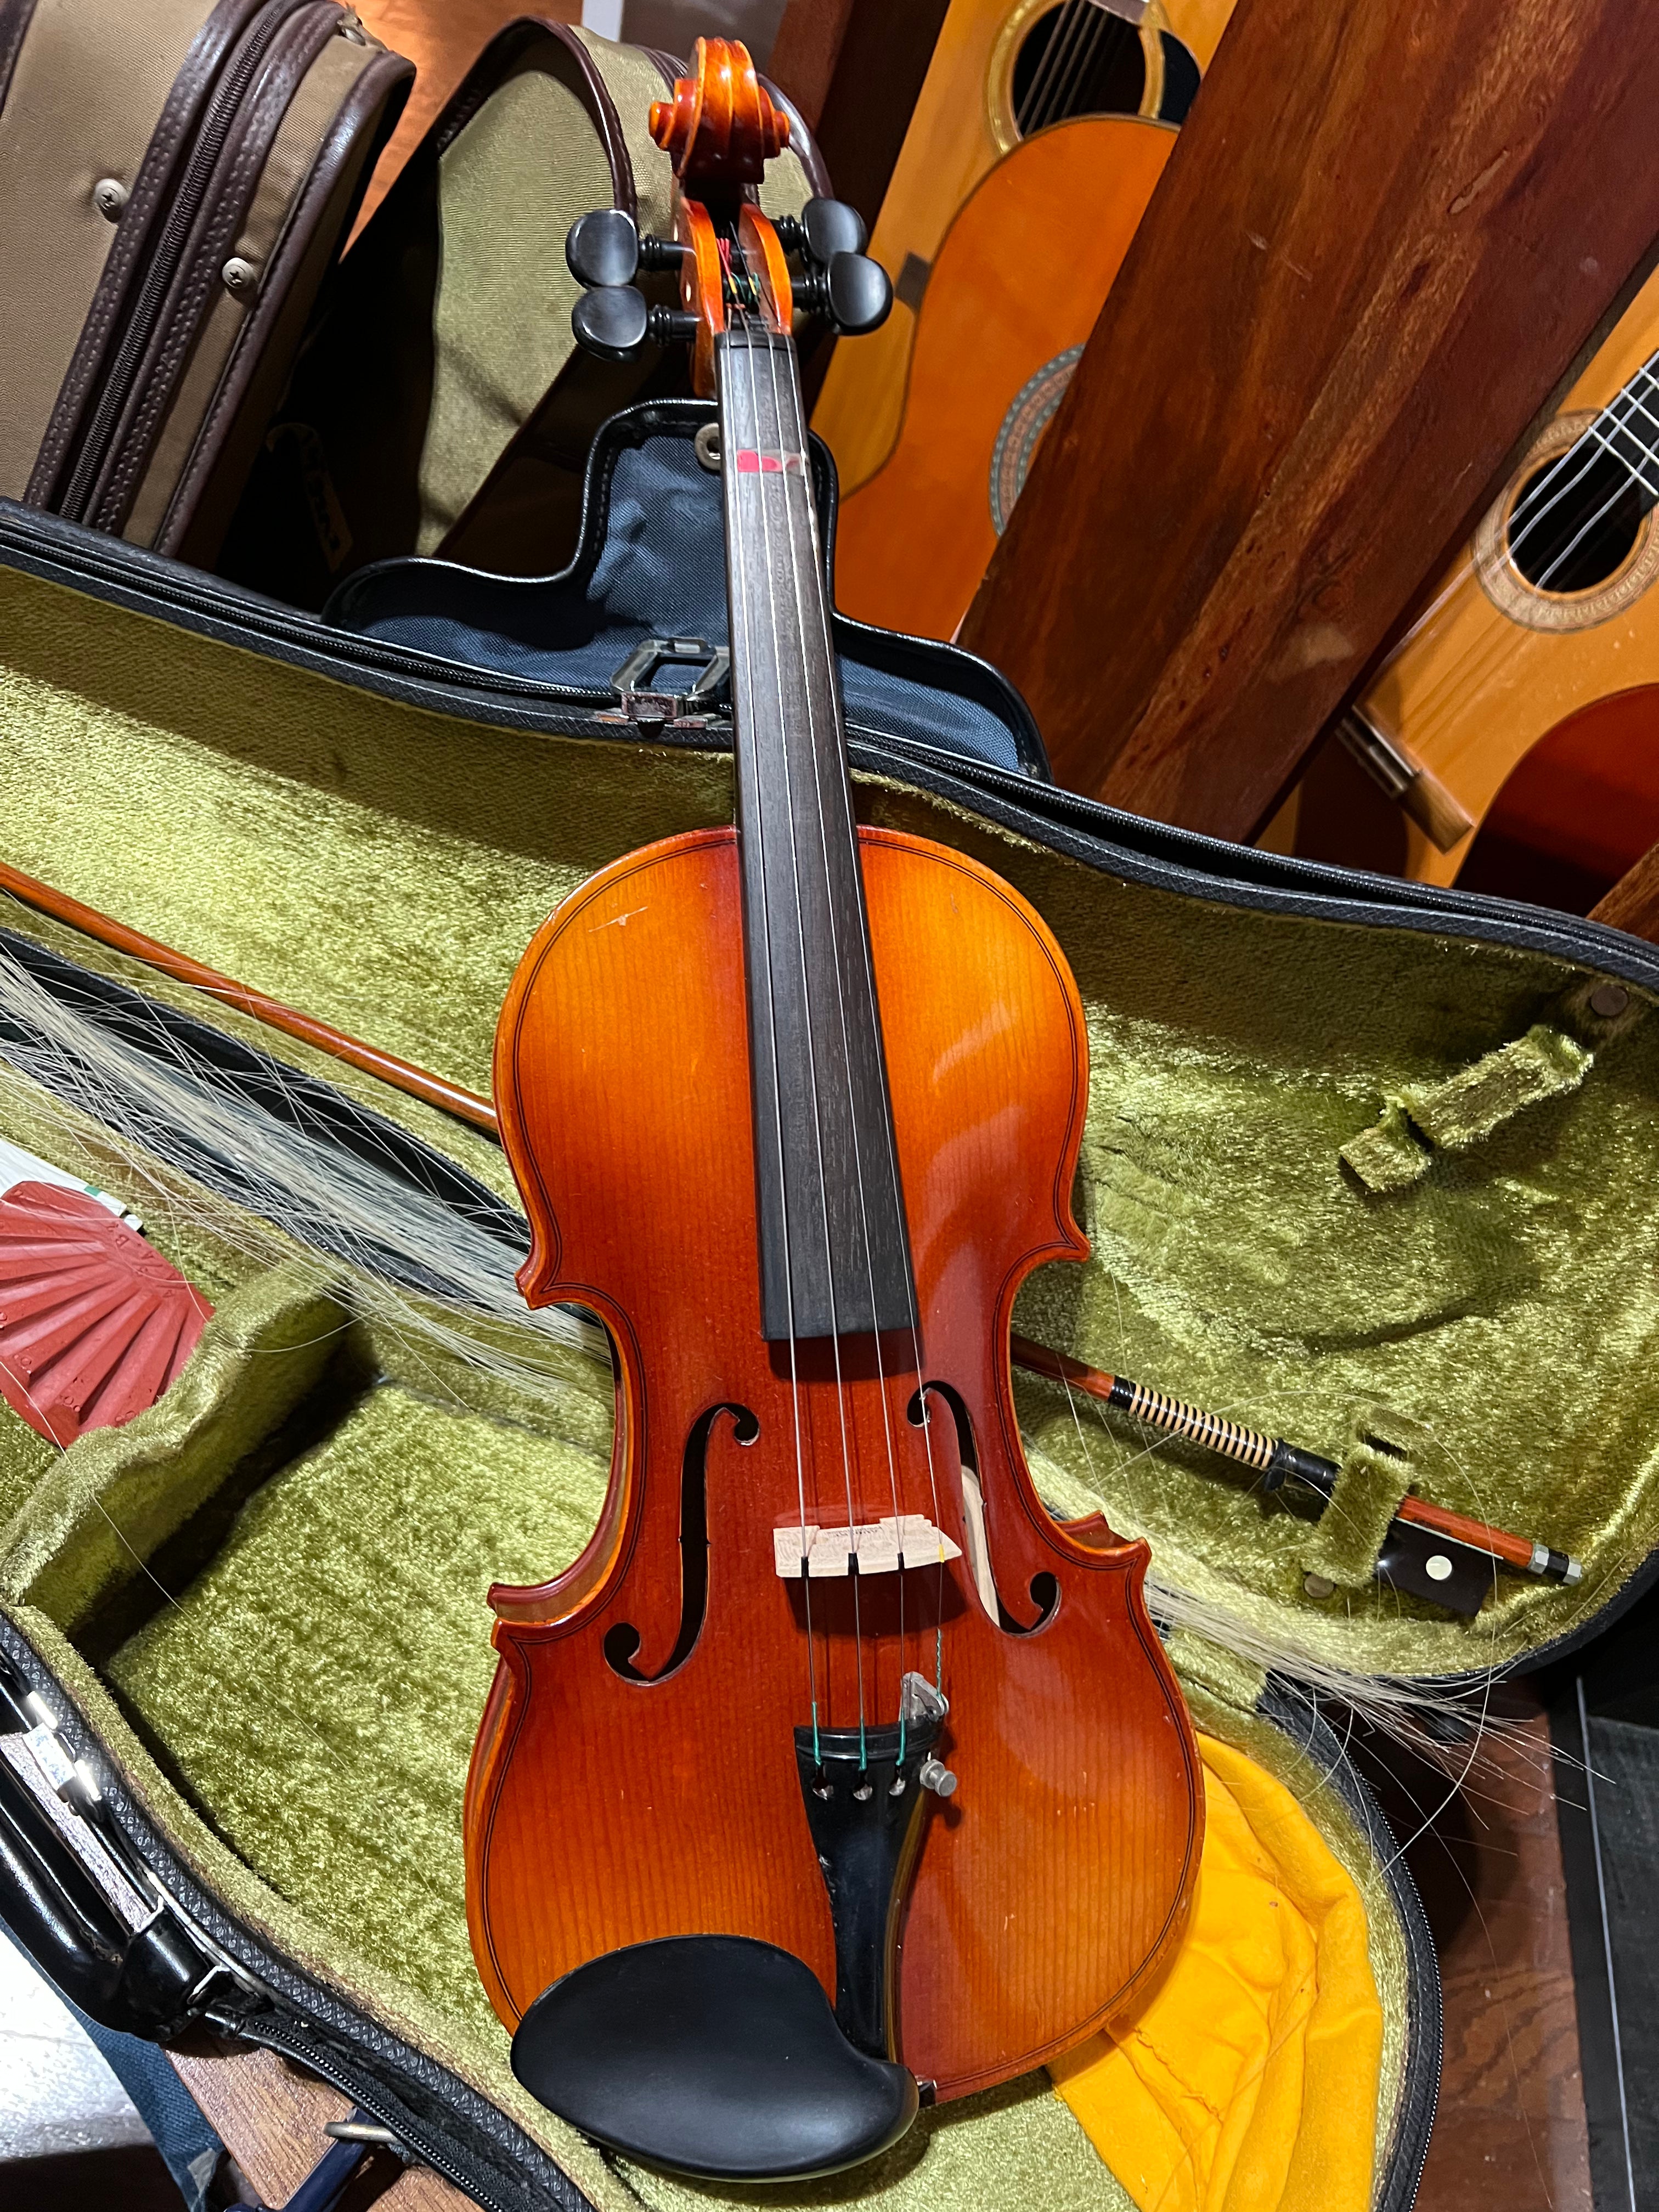 1988 Suzuki Violin No. 280 (3/4) - Nagoya Japan - with Case, Bow